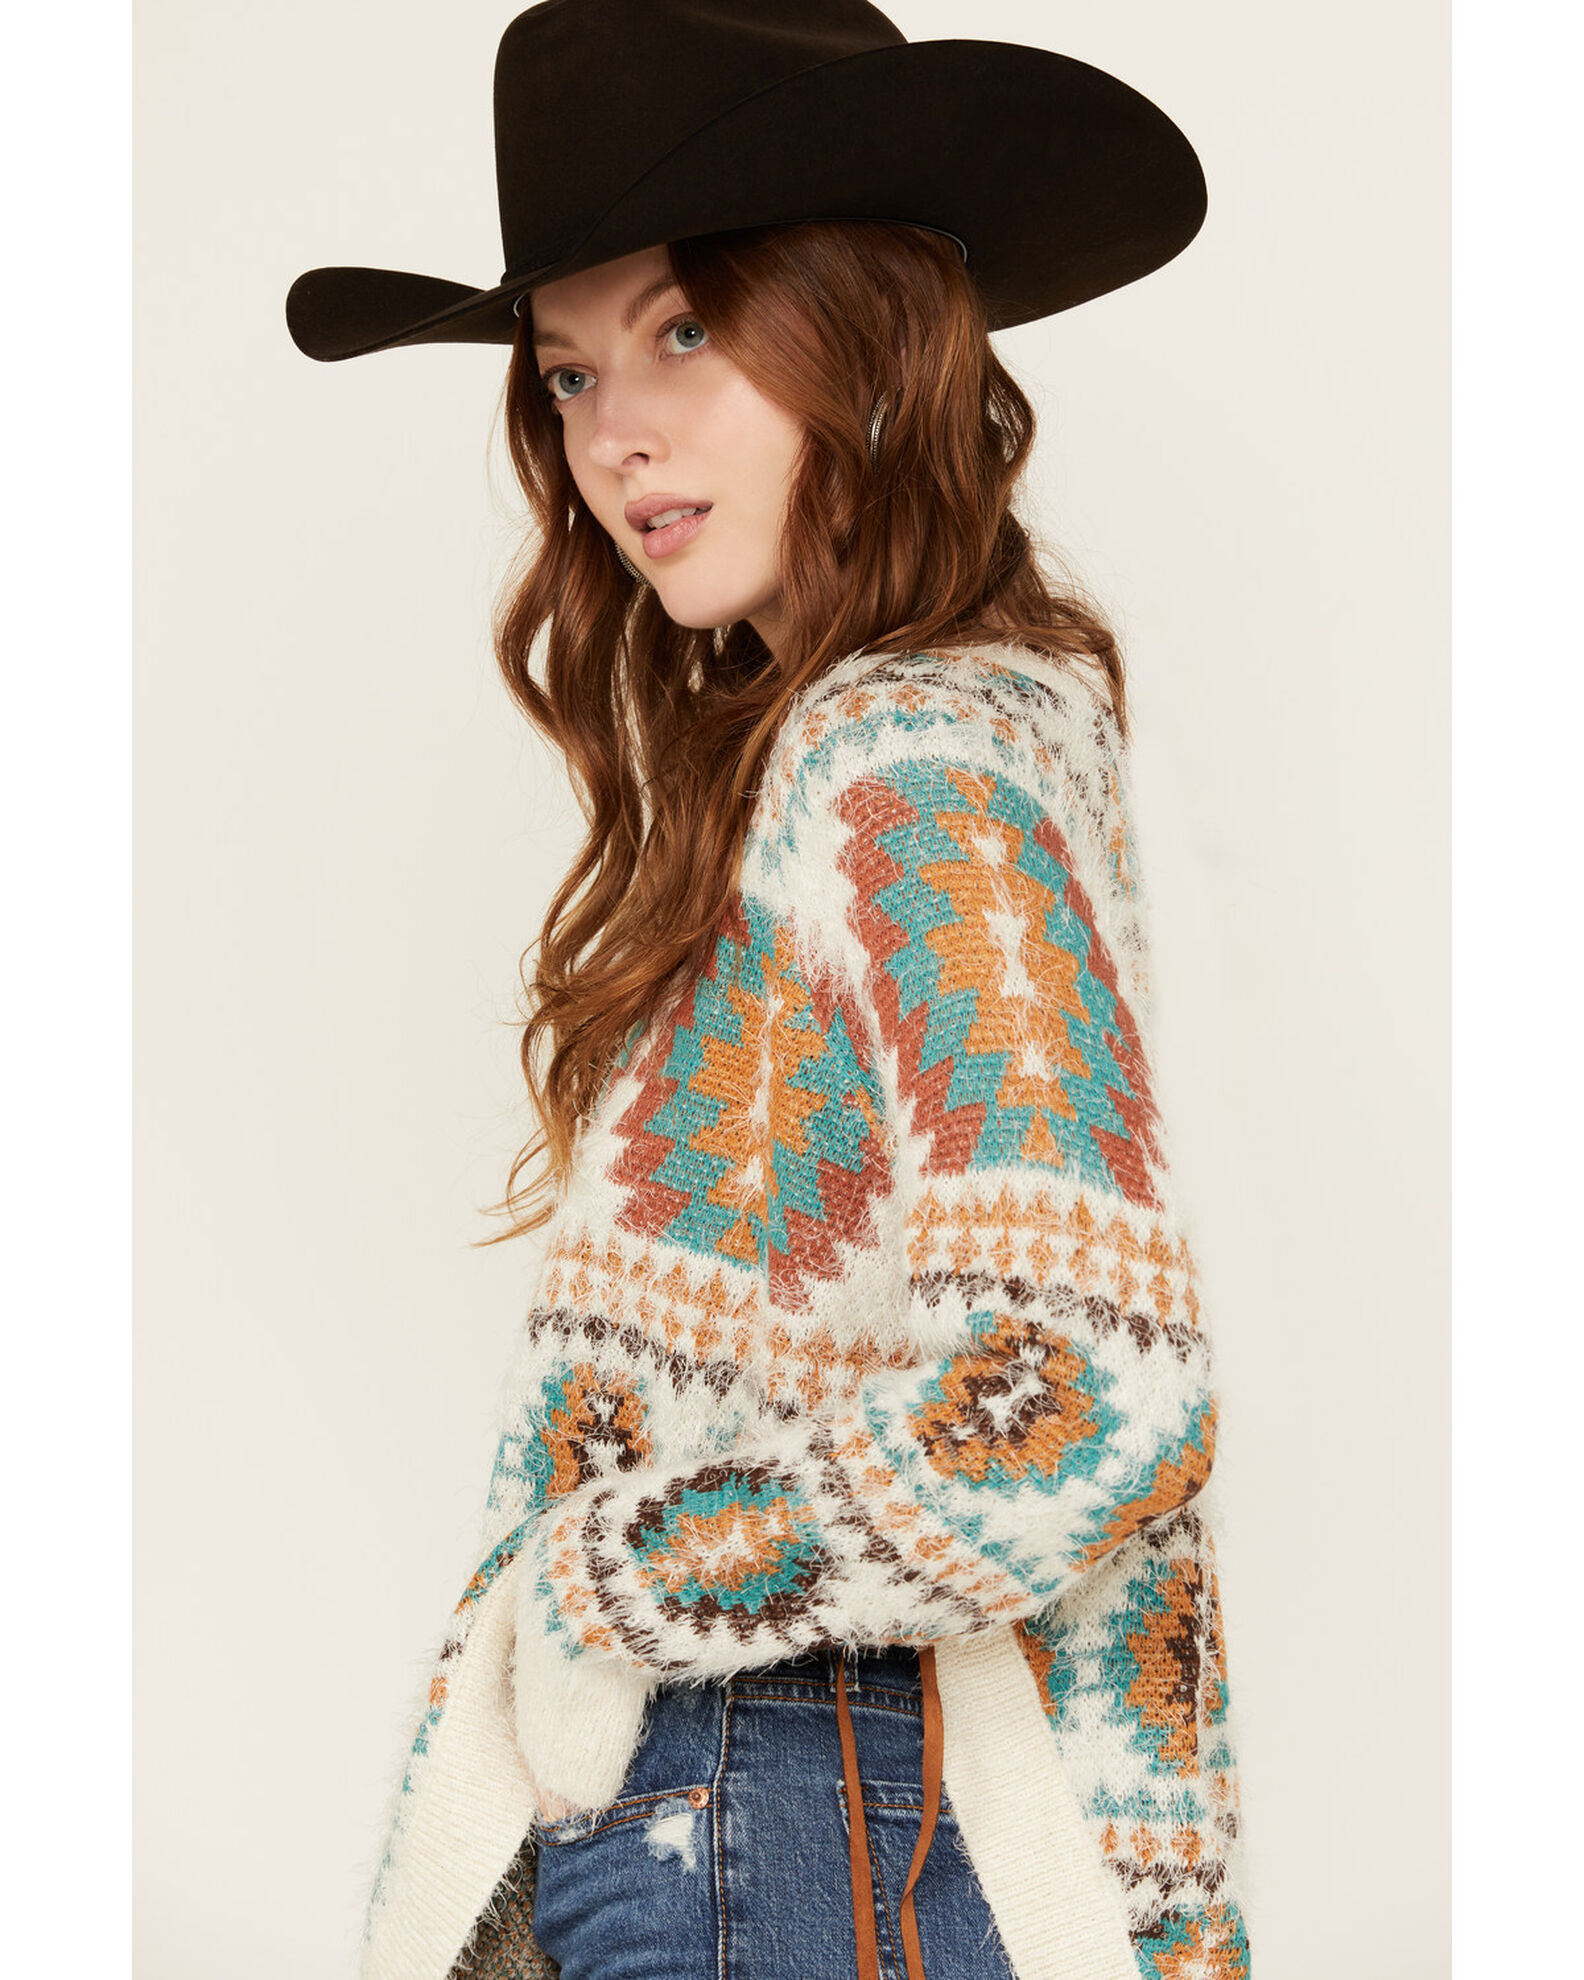 Cotton & Rye Women's Southwestern Print Eyelash Round Bottom Sweater